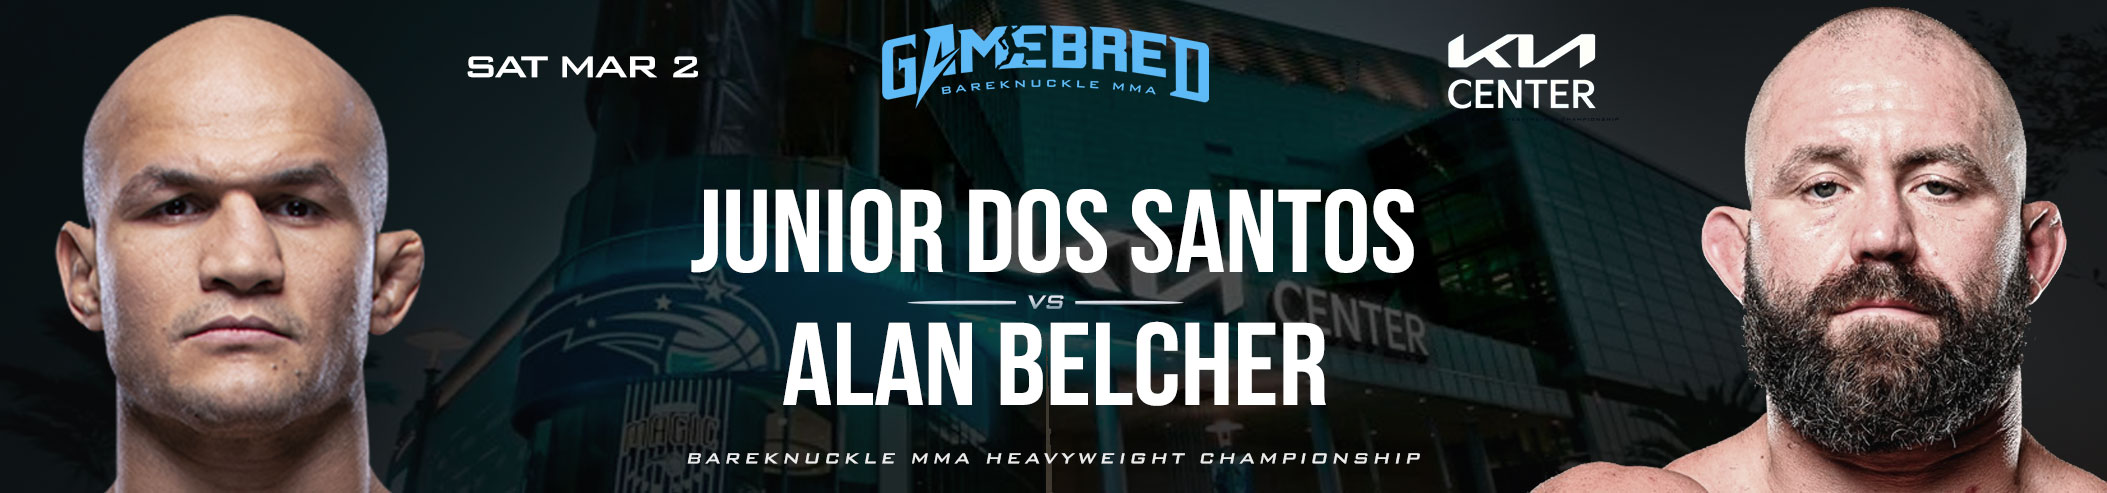 Gamebred bareknuckle MMA Junior Dos Santos vs Alan Belcher